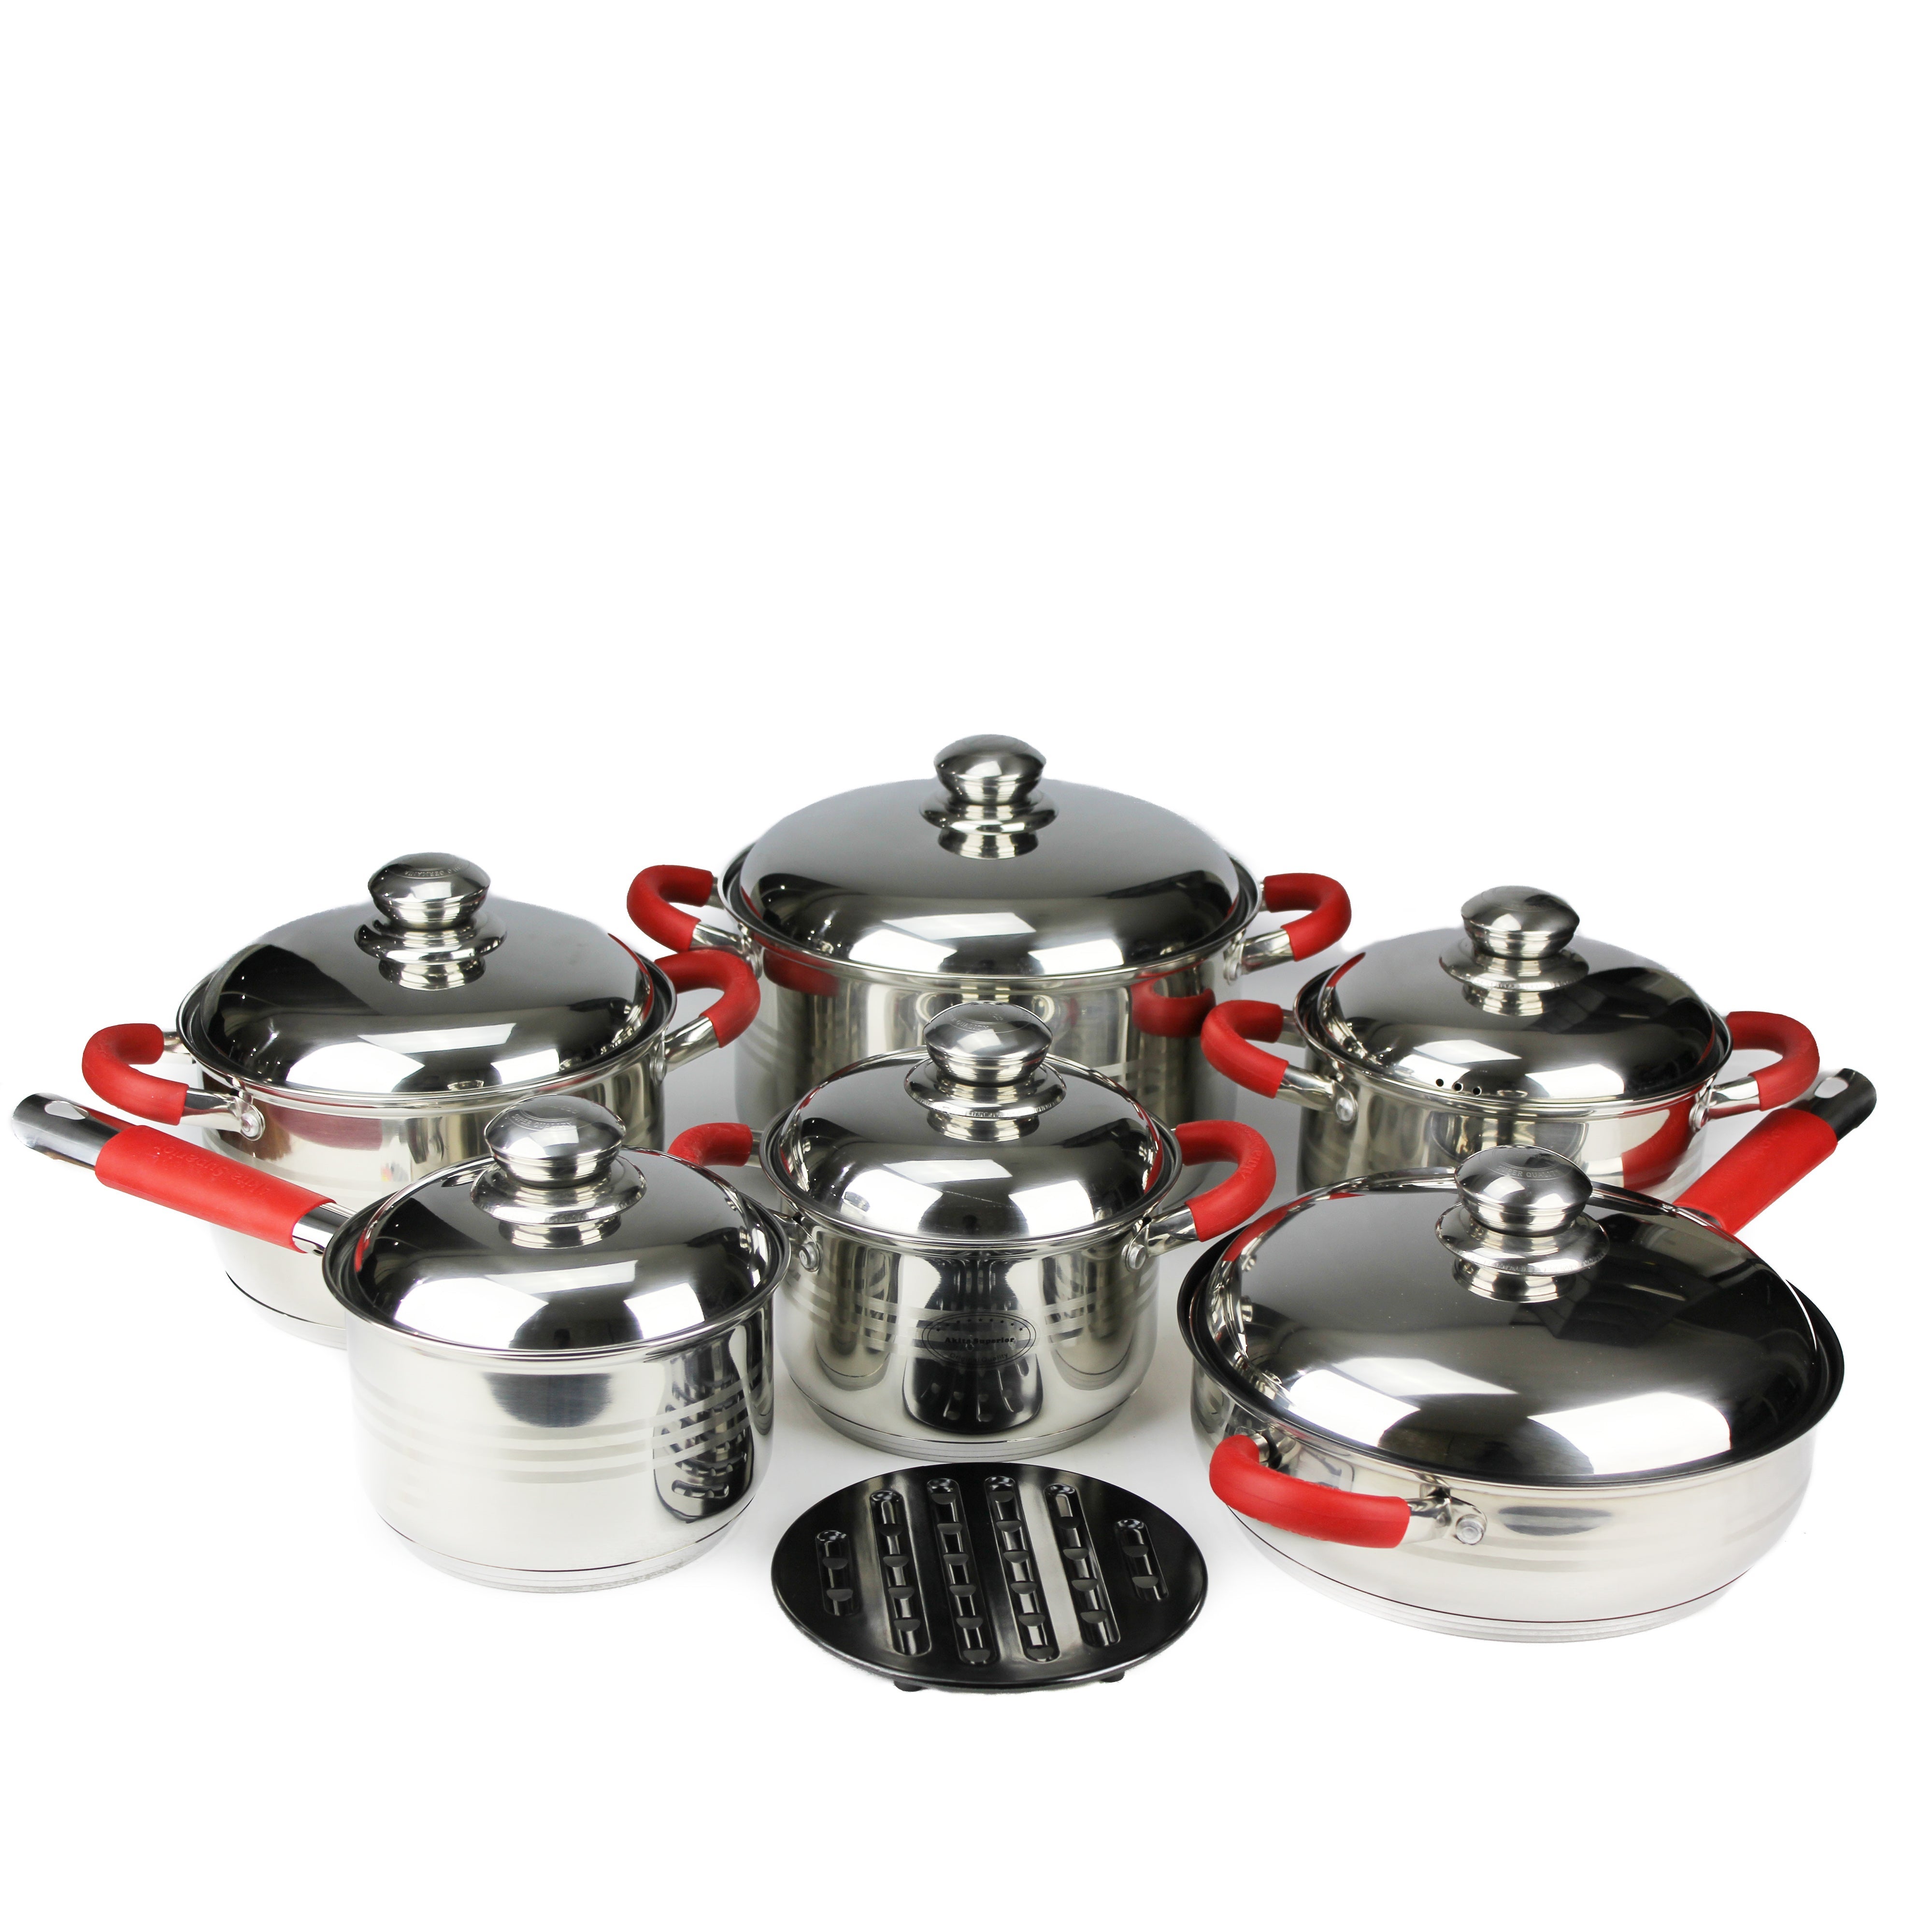 Stainless Steel Induction Ceramic Cookware Set Casserole Frypan Saucepan 12 Pcs